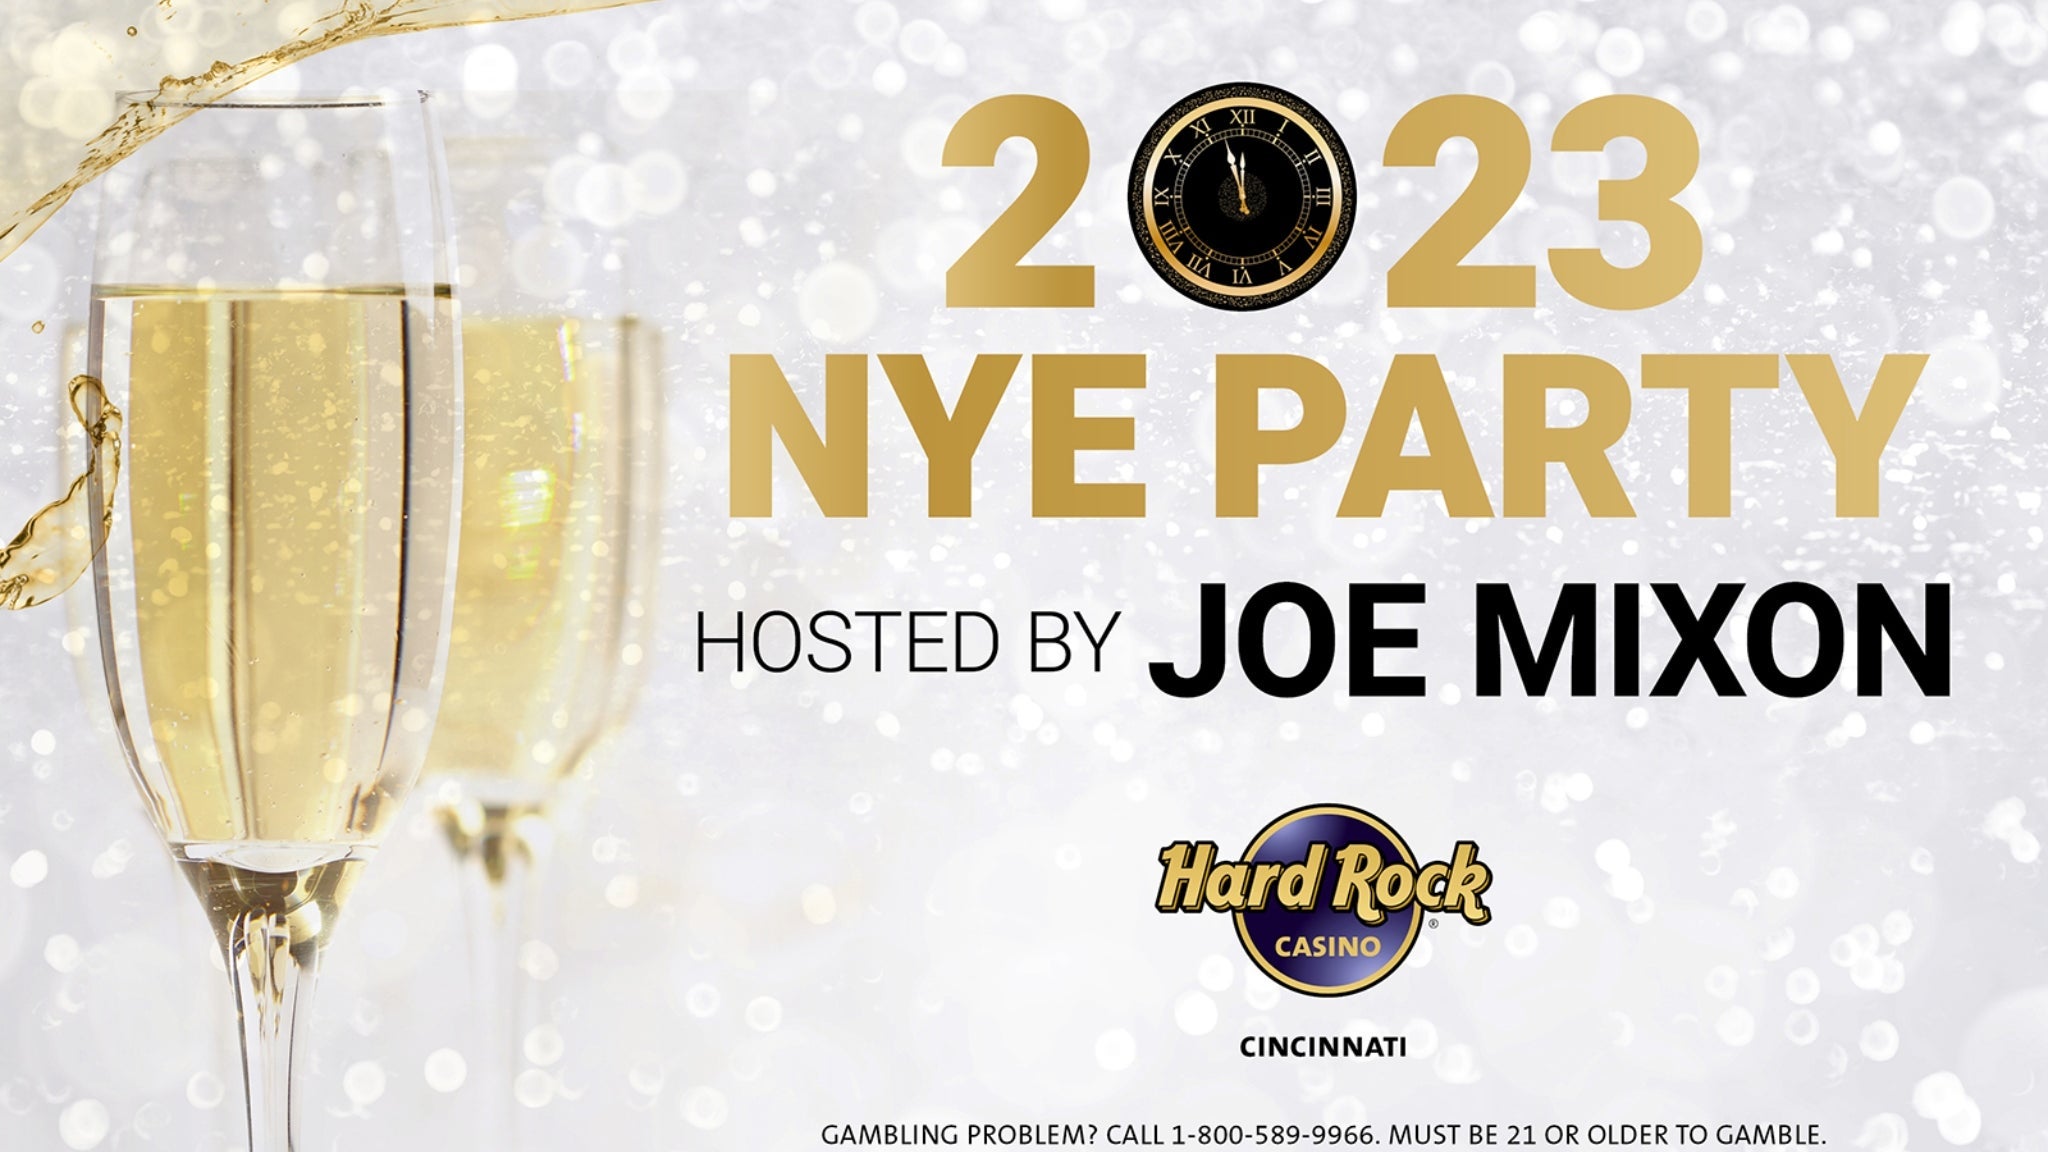 Hard Rock NYE Party Hosted by Joe Mixon